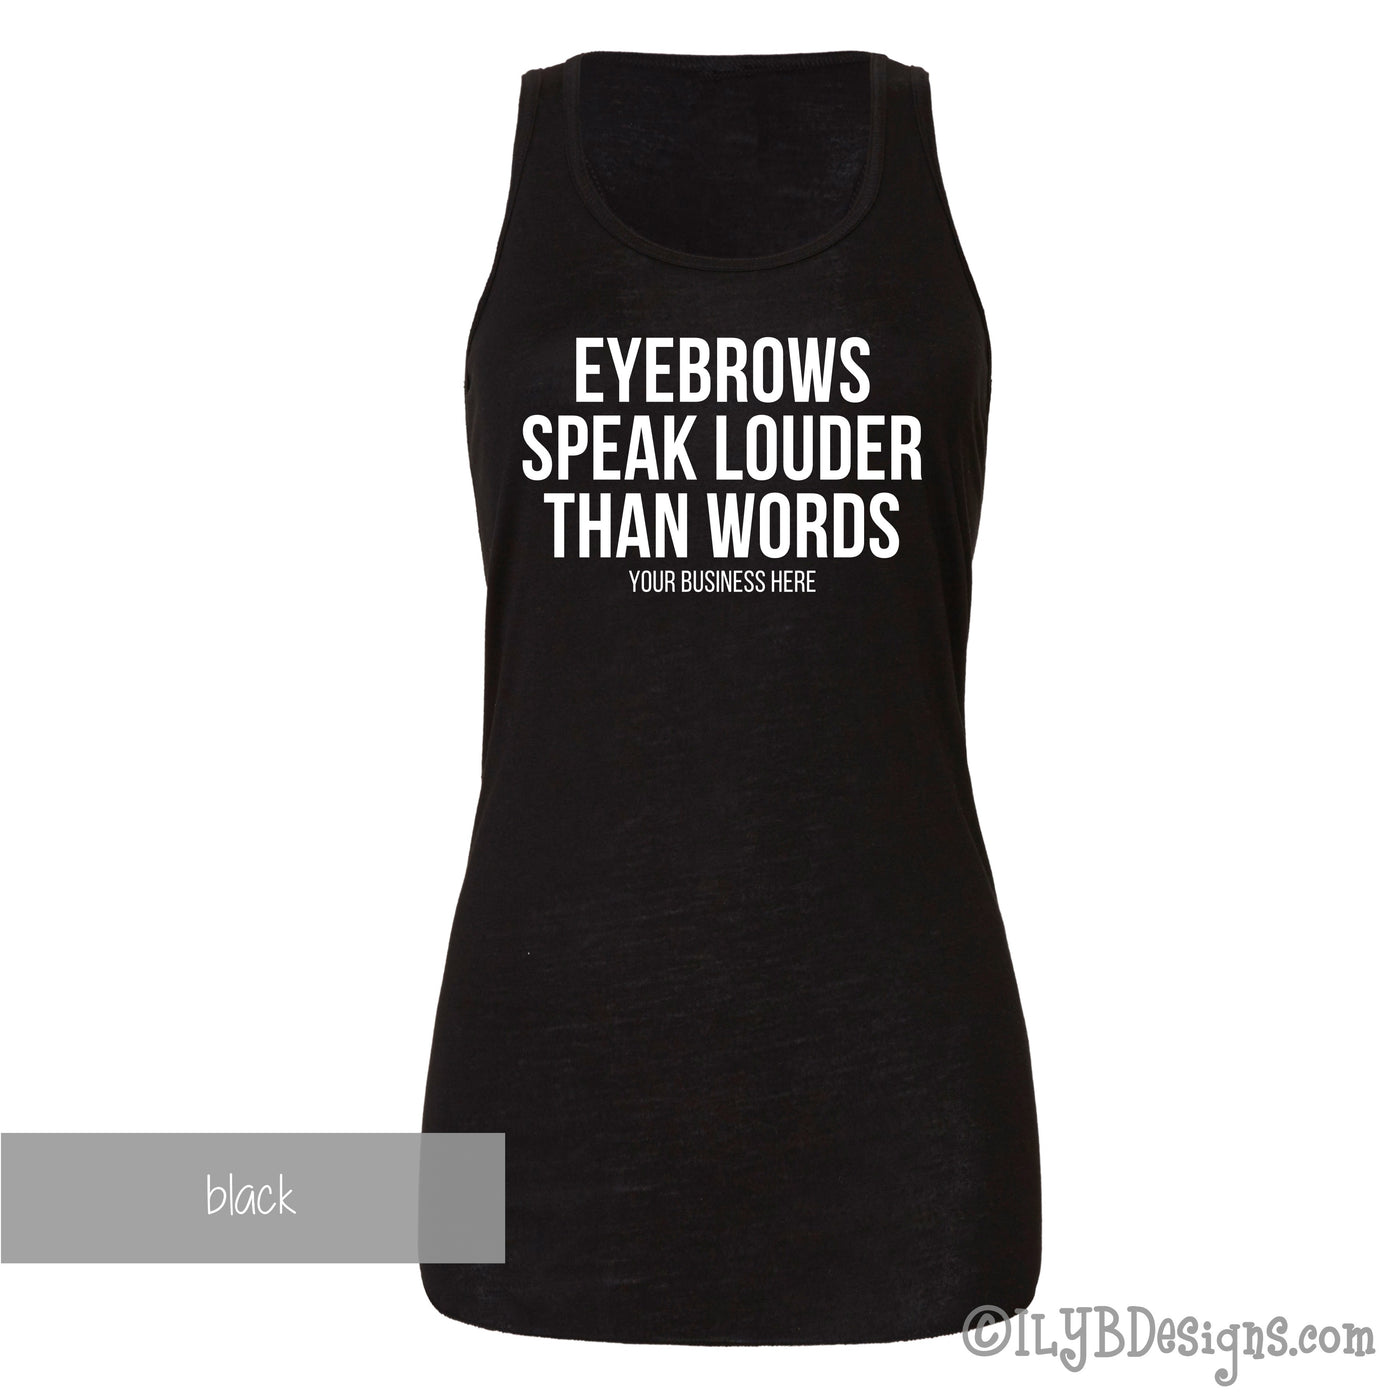 Eyebrows Speak Louder Than Words Tank - Custom Brow Tank - Eyebrows Shirt - Funny Makeup Quote - ILYB Designs